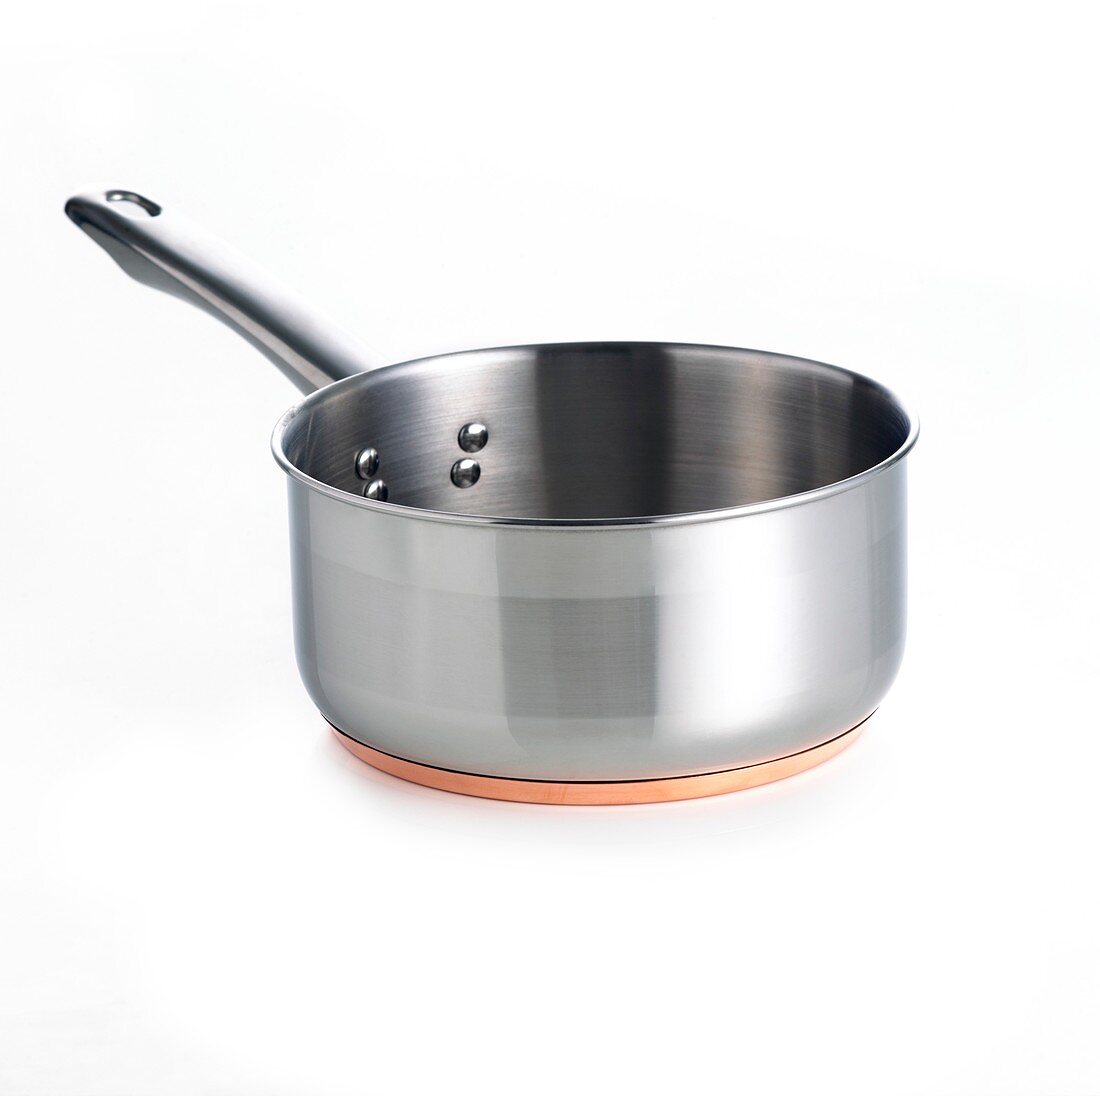 Copper-based saucepan